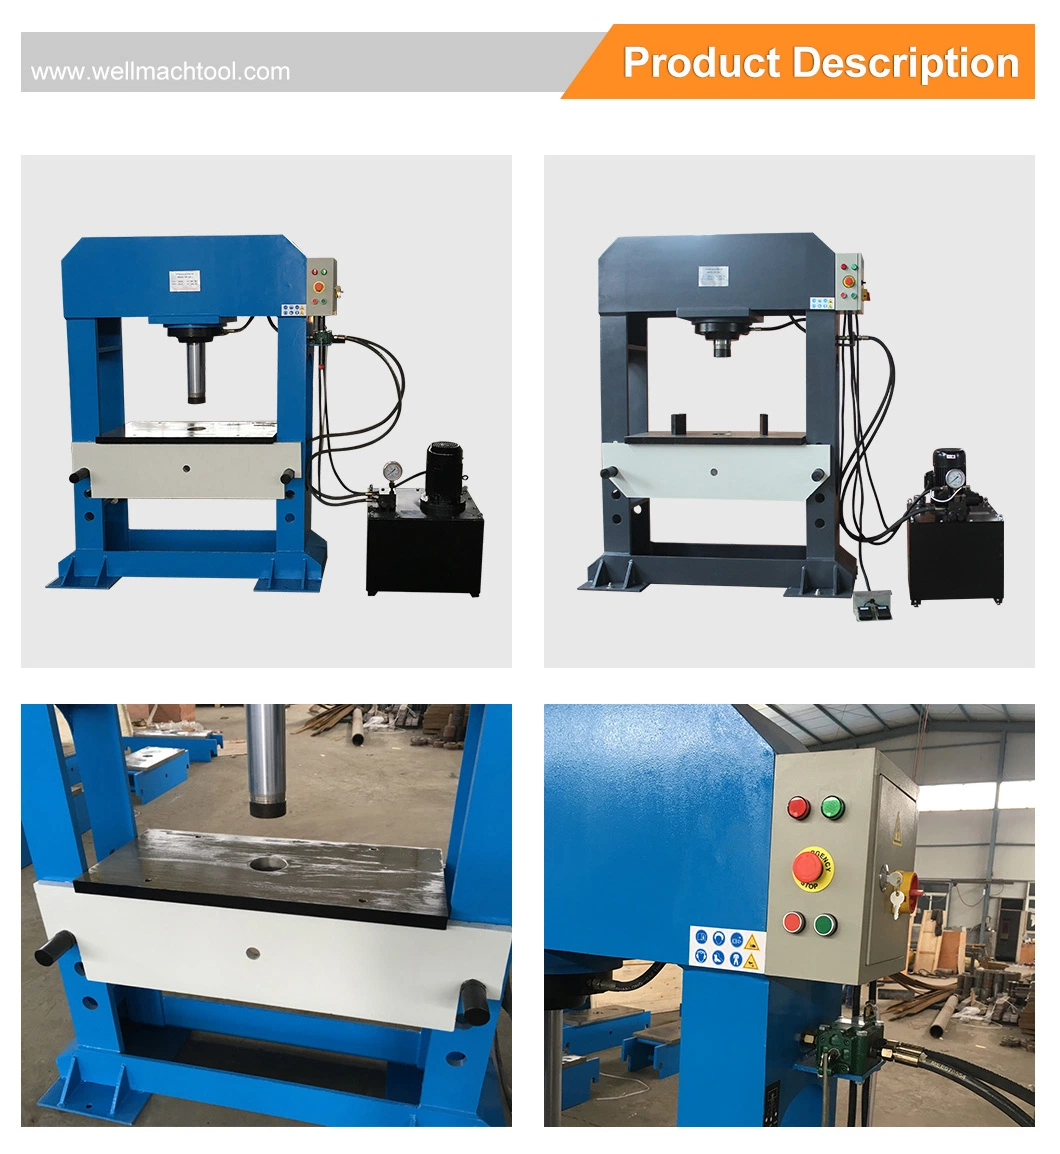 100 ton Hydraulic Press Machine Hydraulic Press HP100 with CE